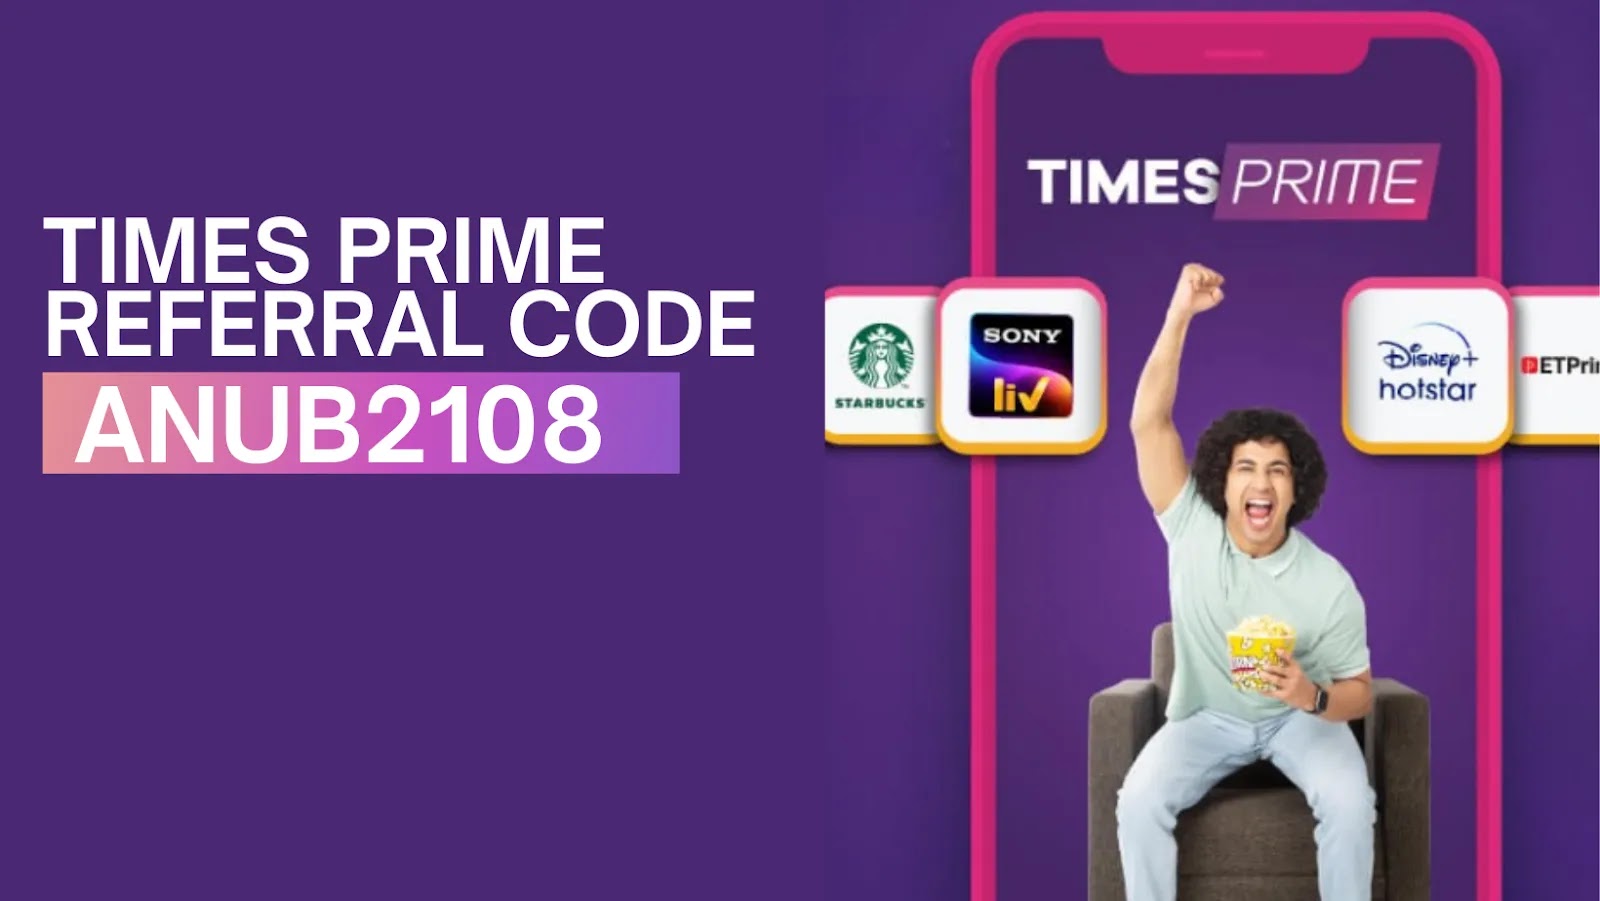 Times prime referral code